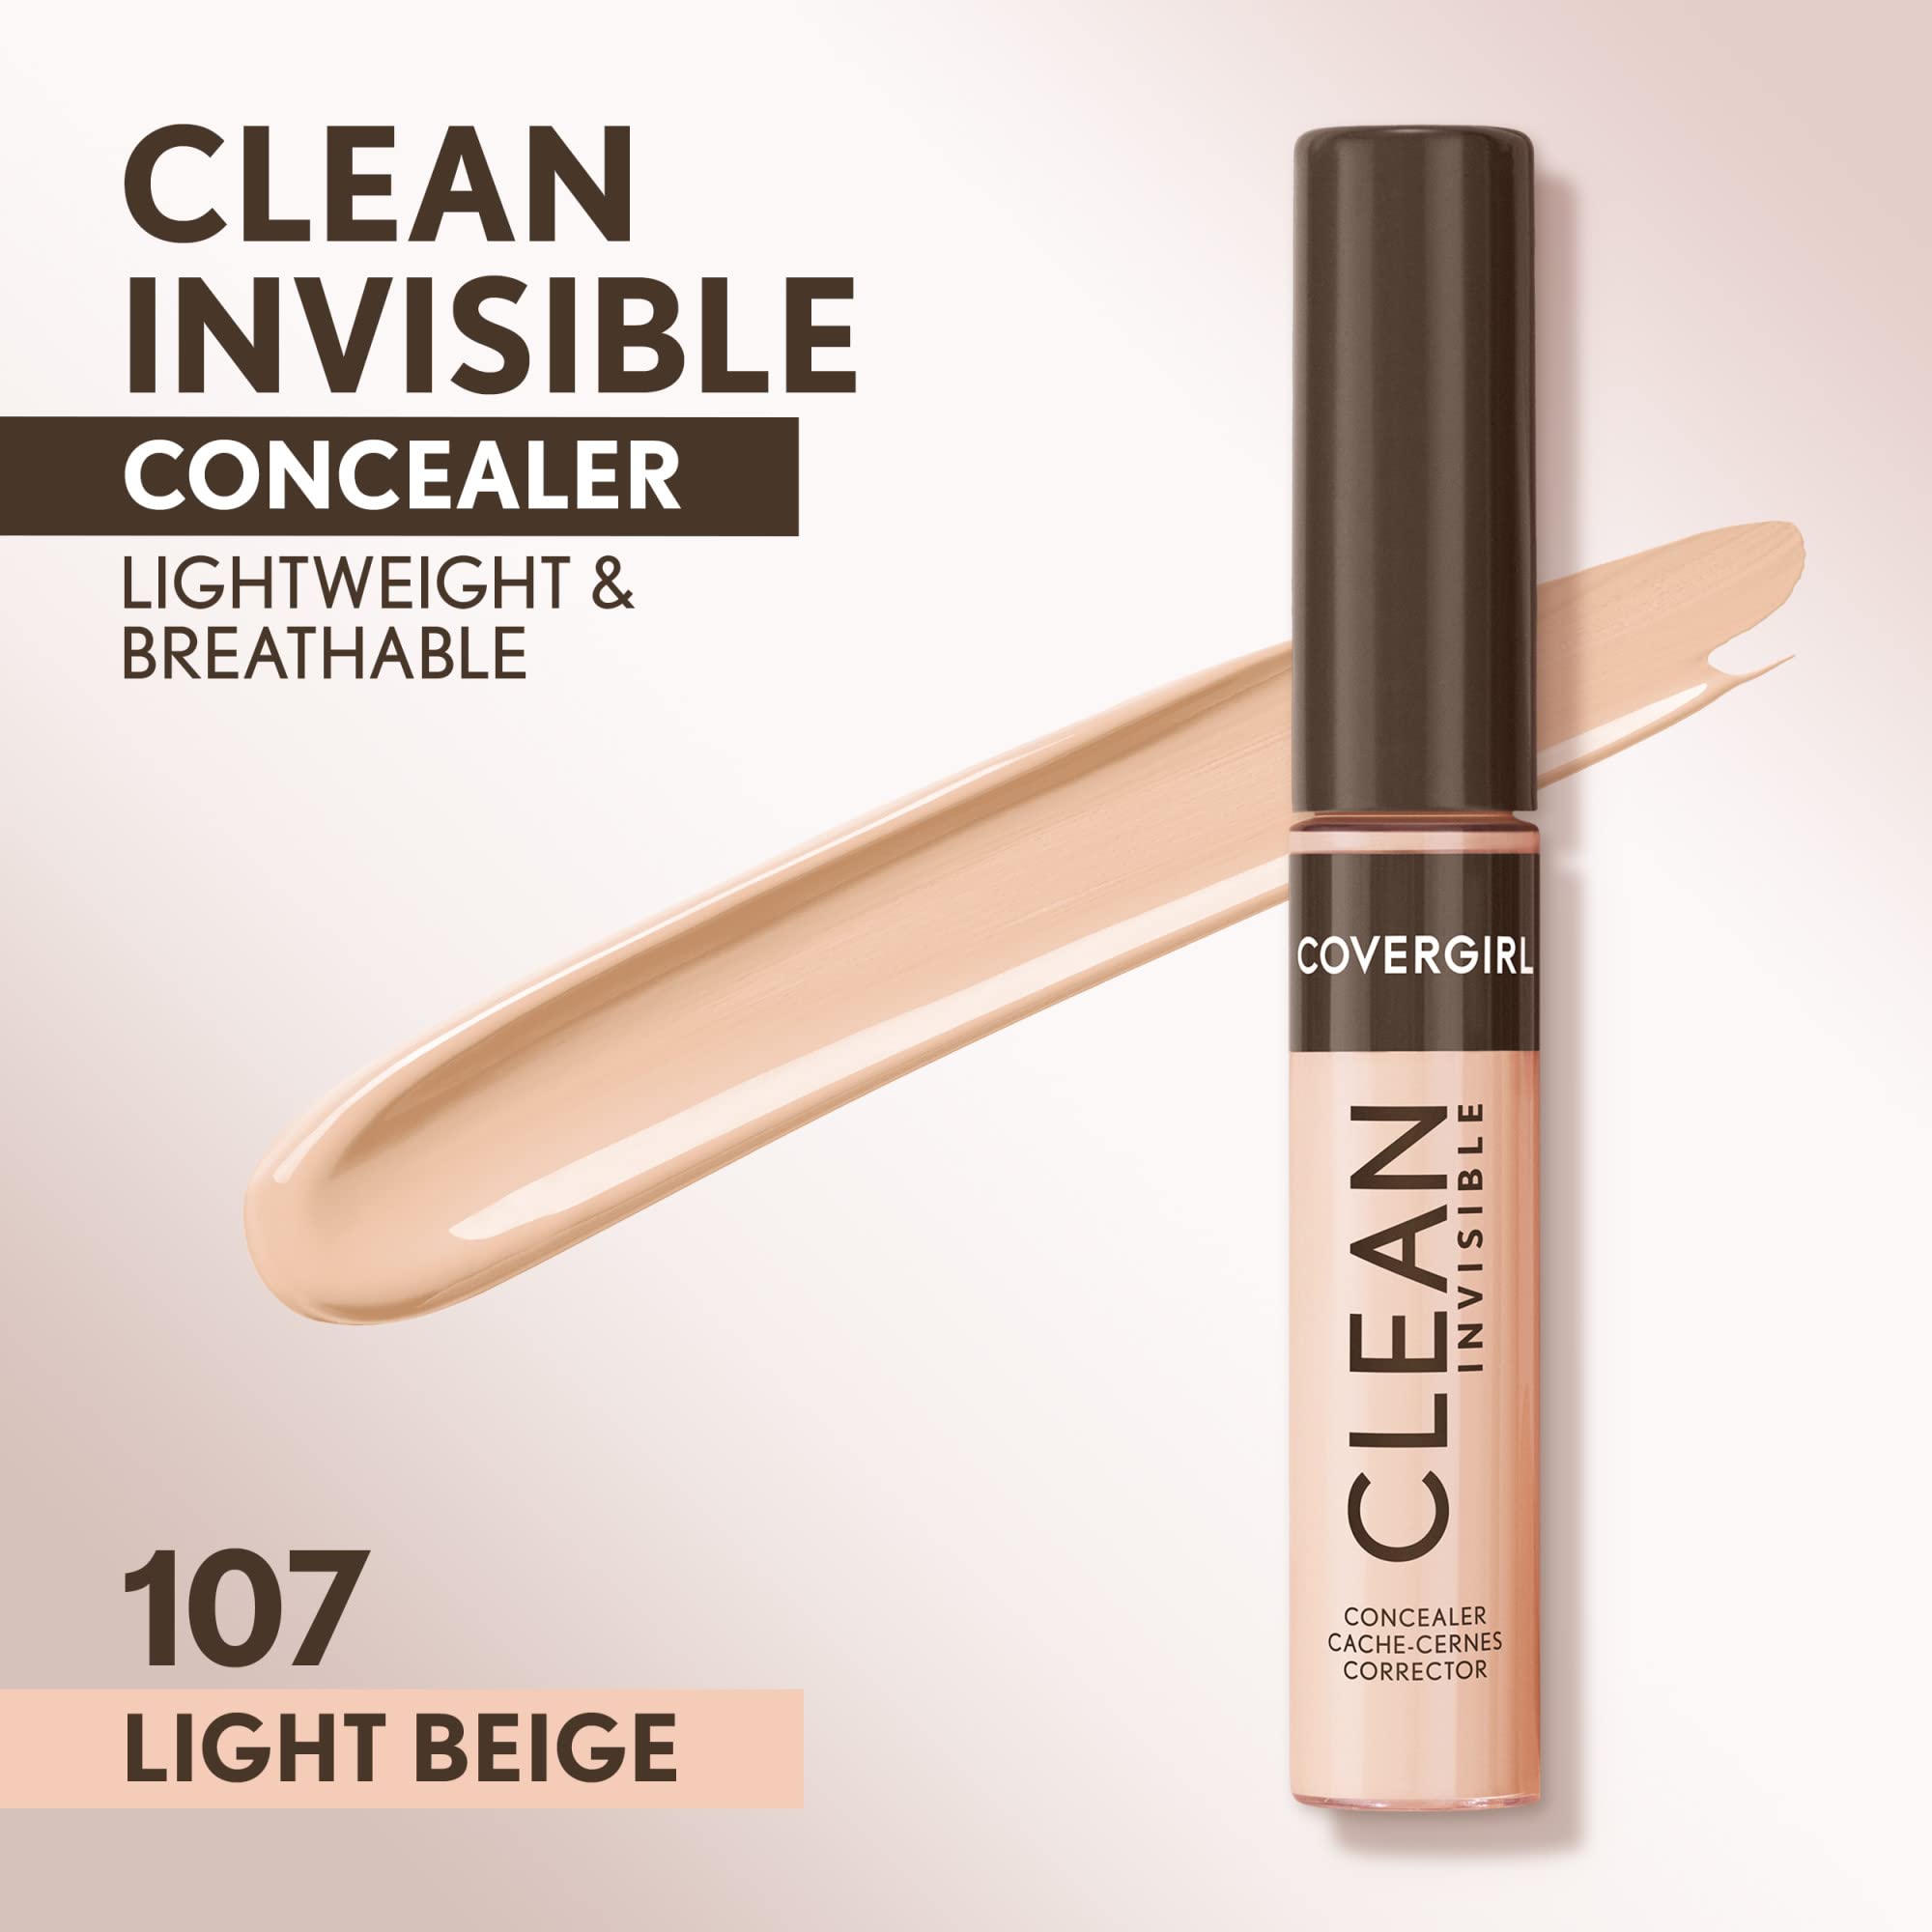 Covergirl Clean Invisible Concealer, Lightweight, Hydrating, Vegan Formula, Light Beige 107, 0.23oz